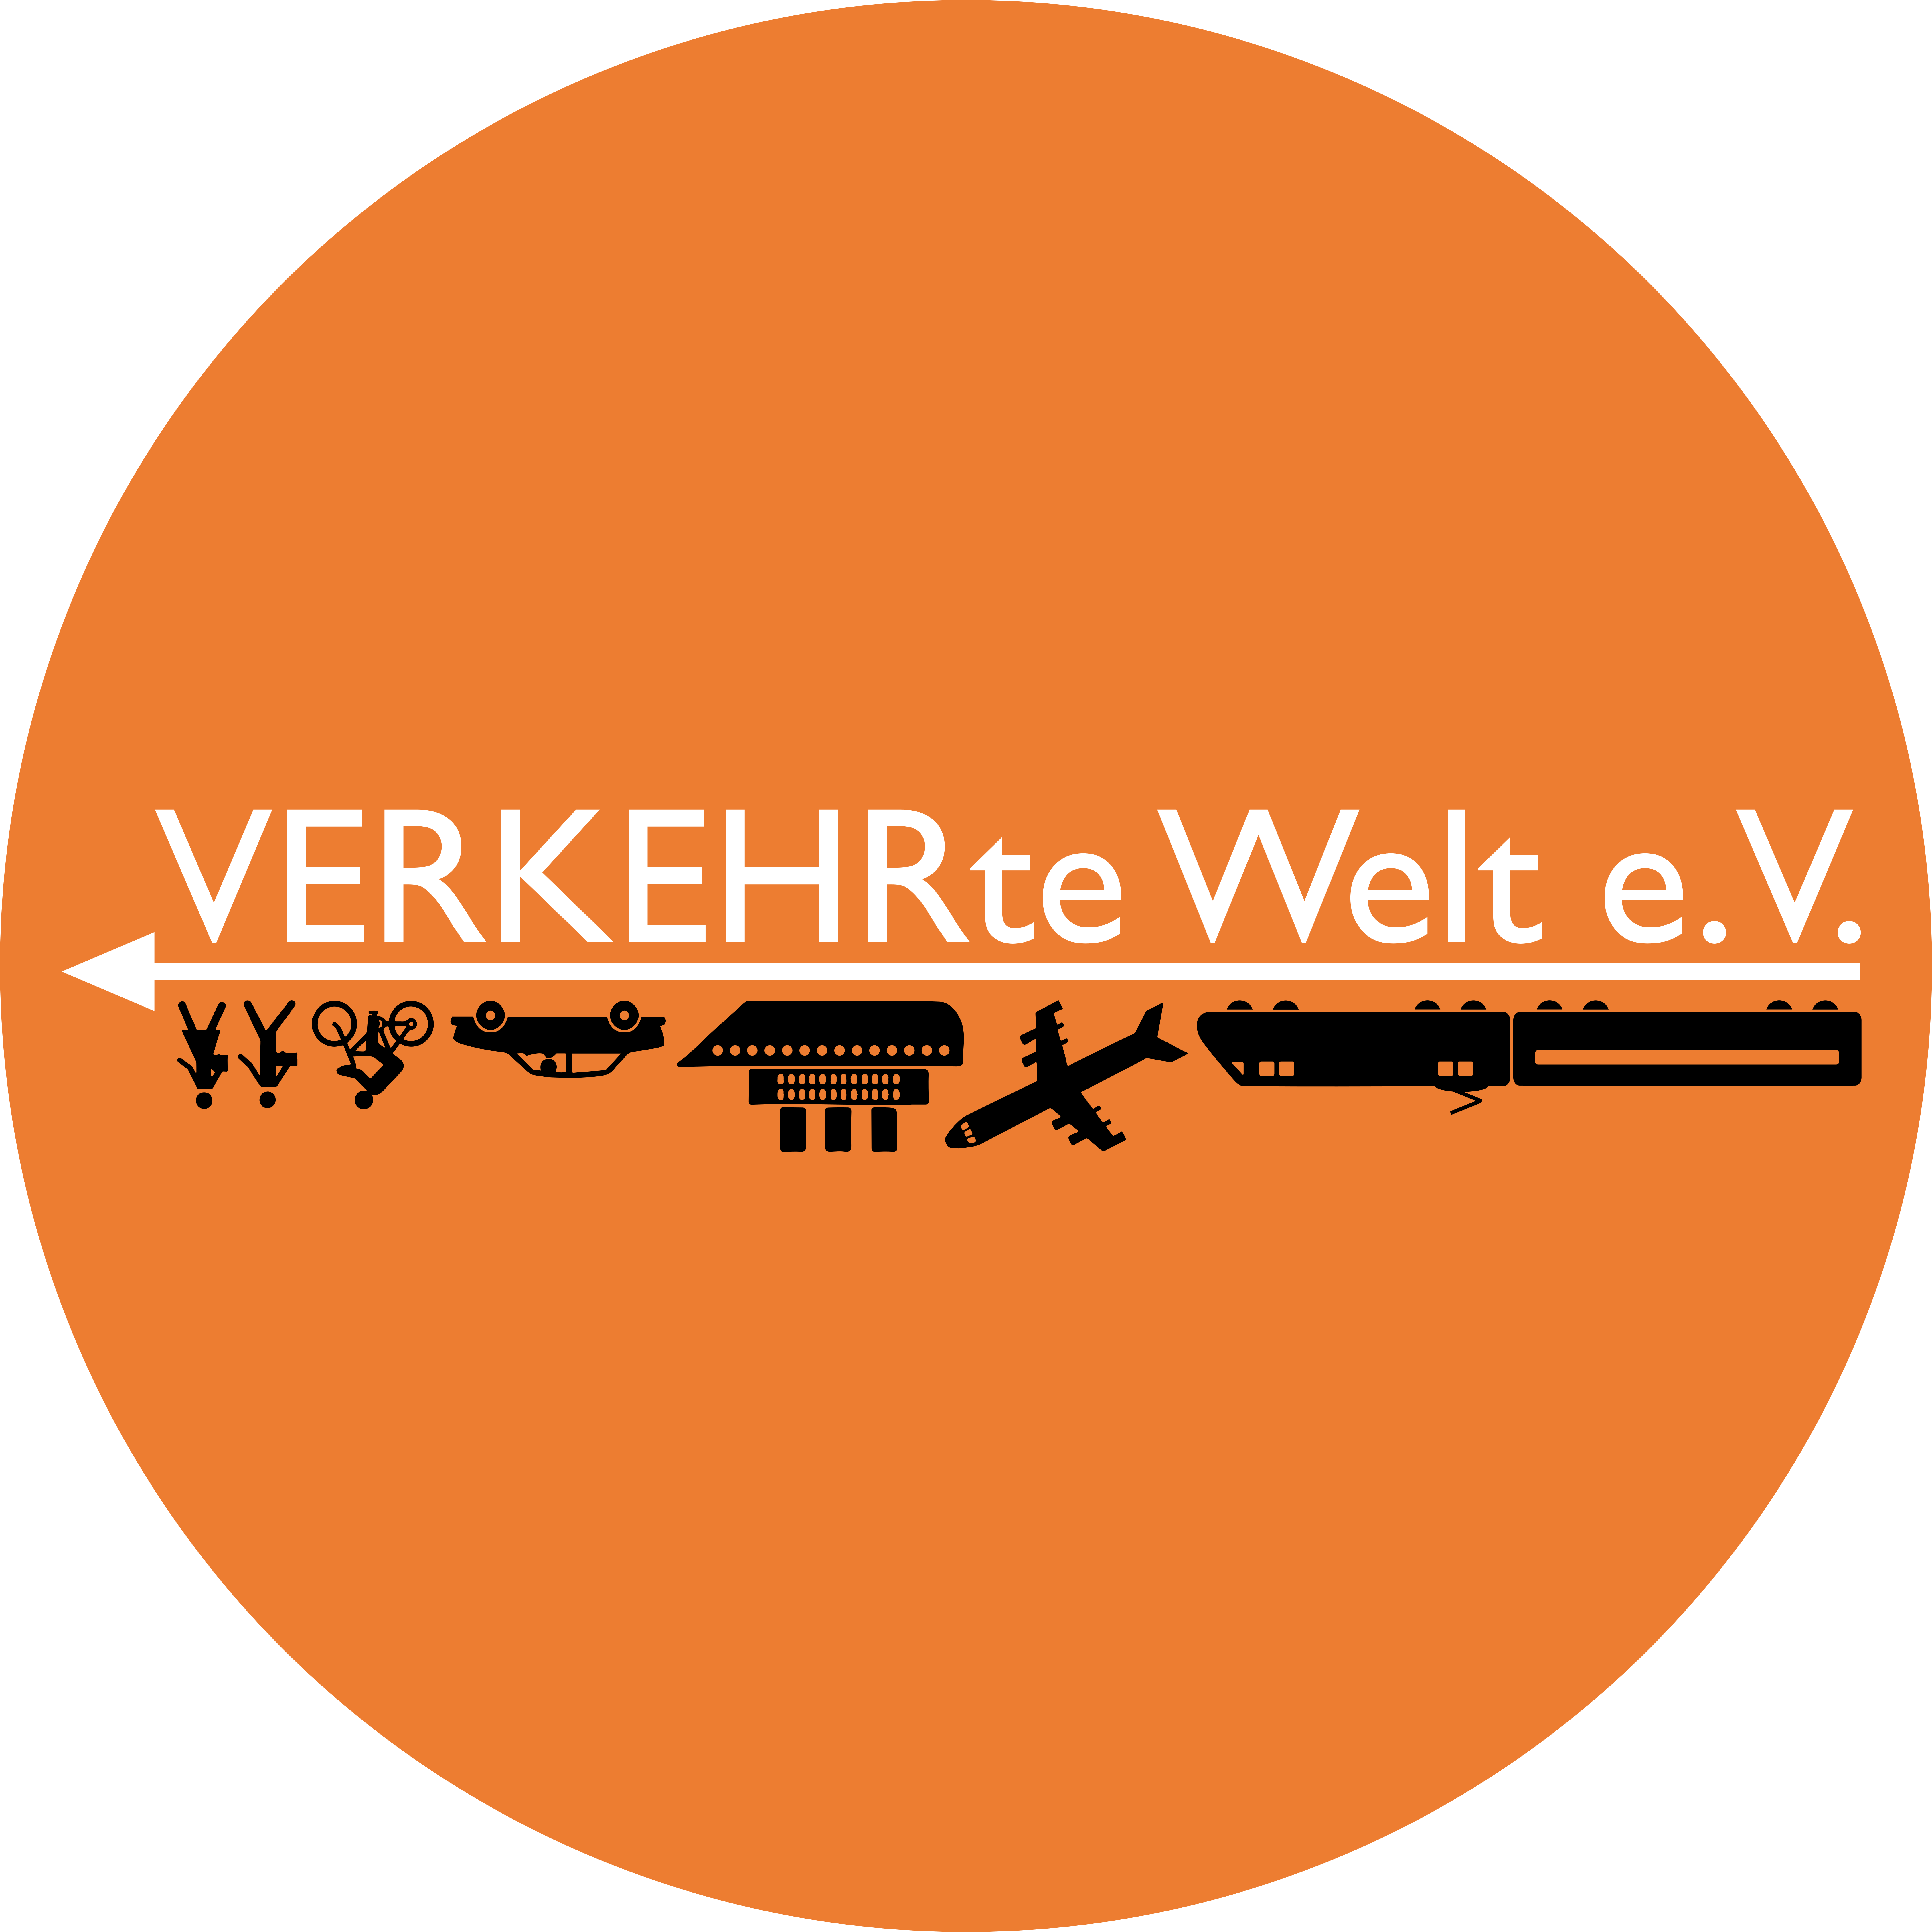 Balkan excursion planning meeting and association meeting of the “Verkehrte Welt”